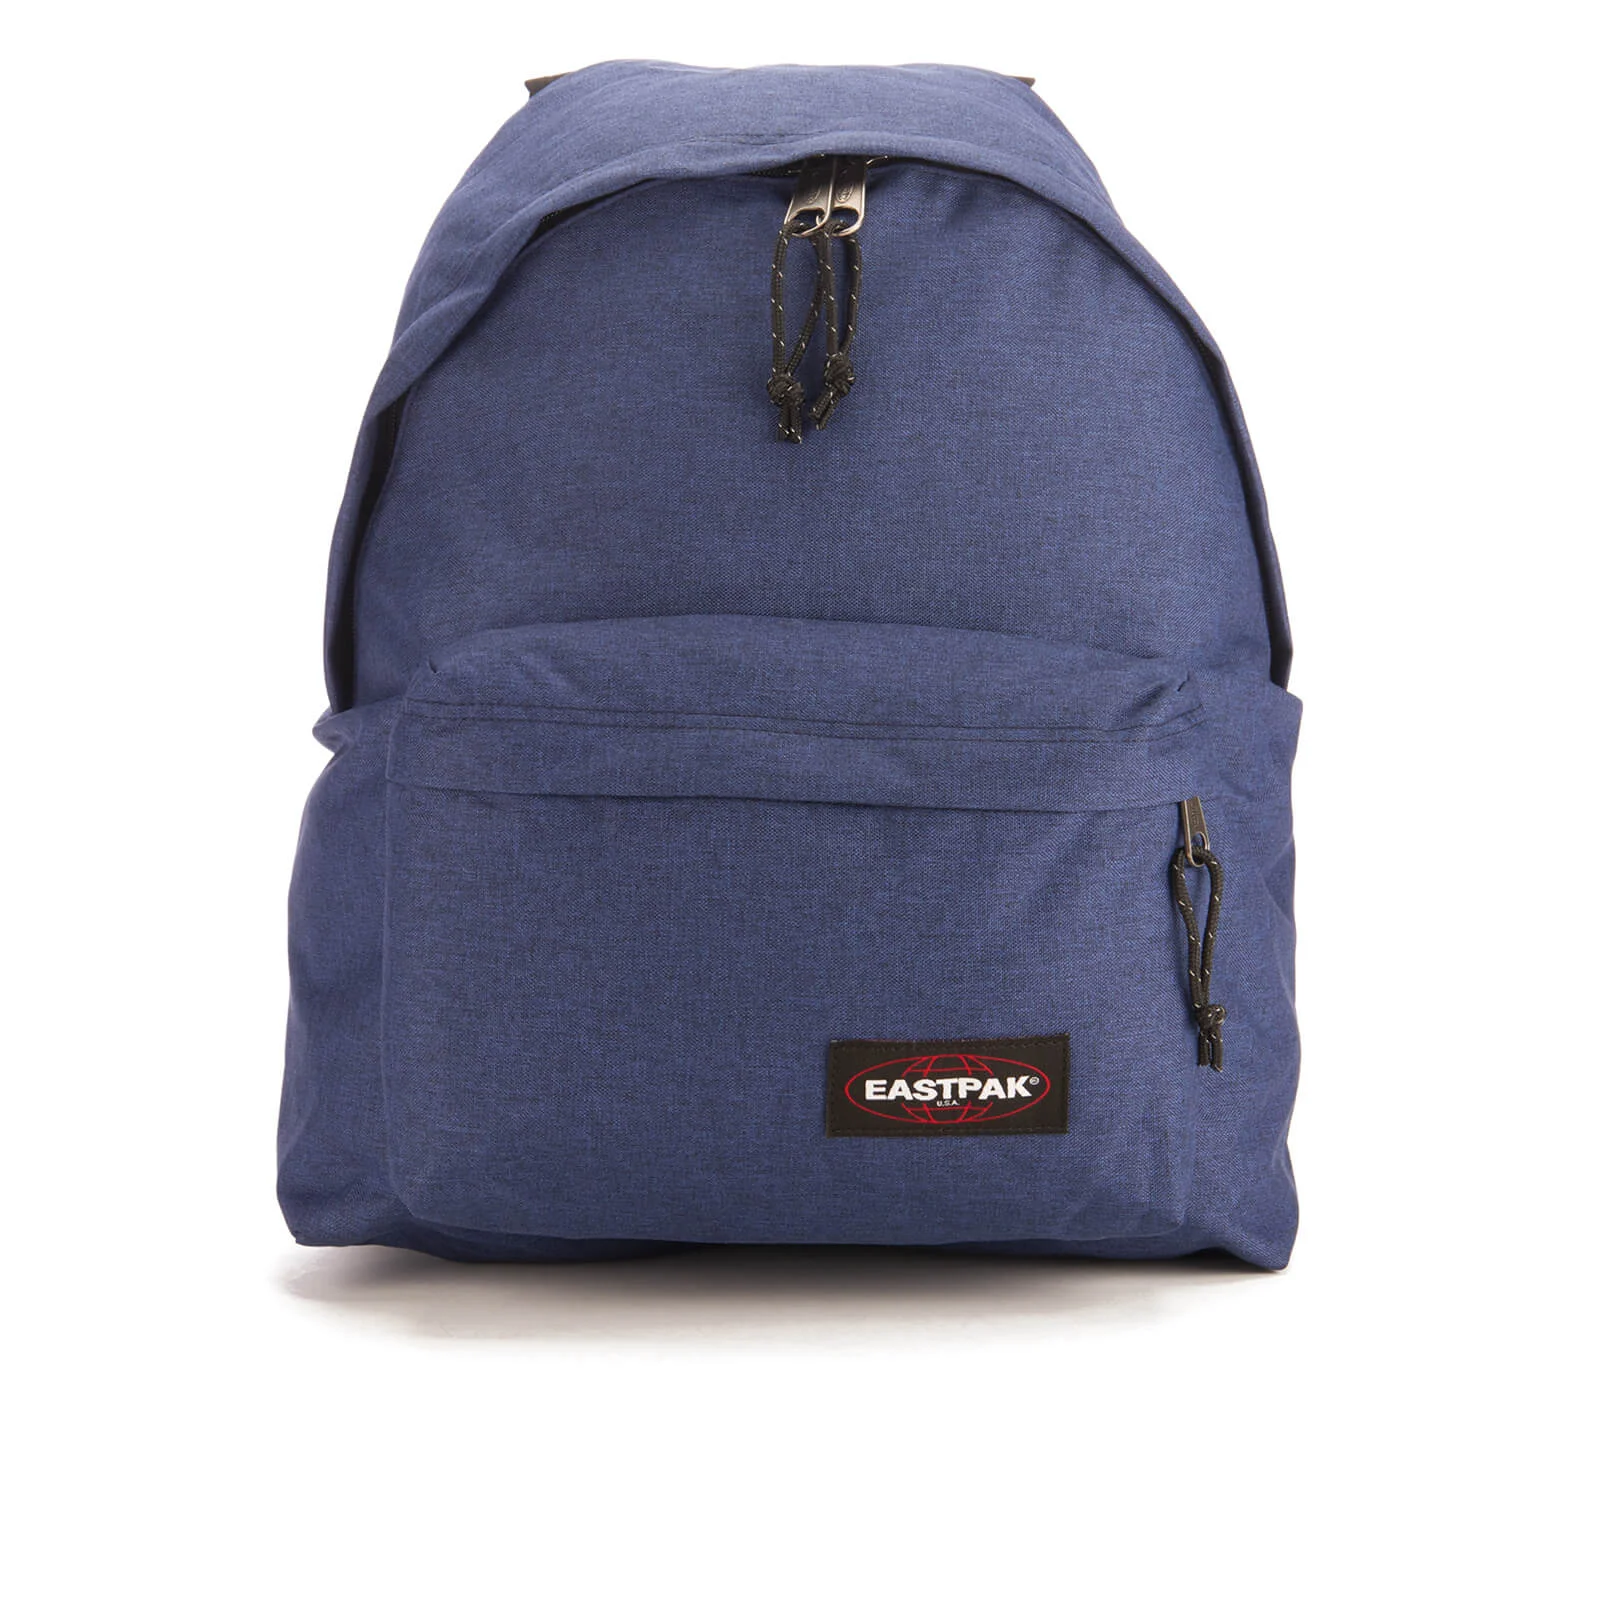 Eastpak Padded Pak'r Backpack - Crafty Blue Image 1